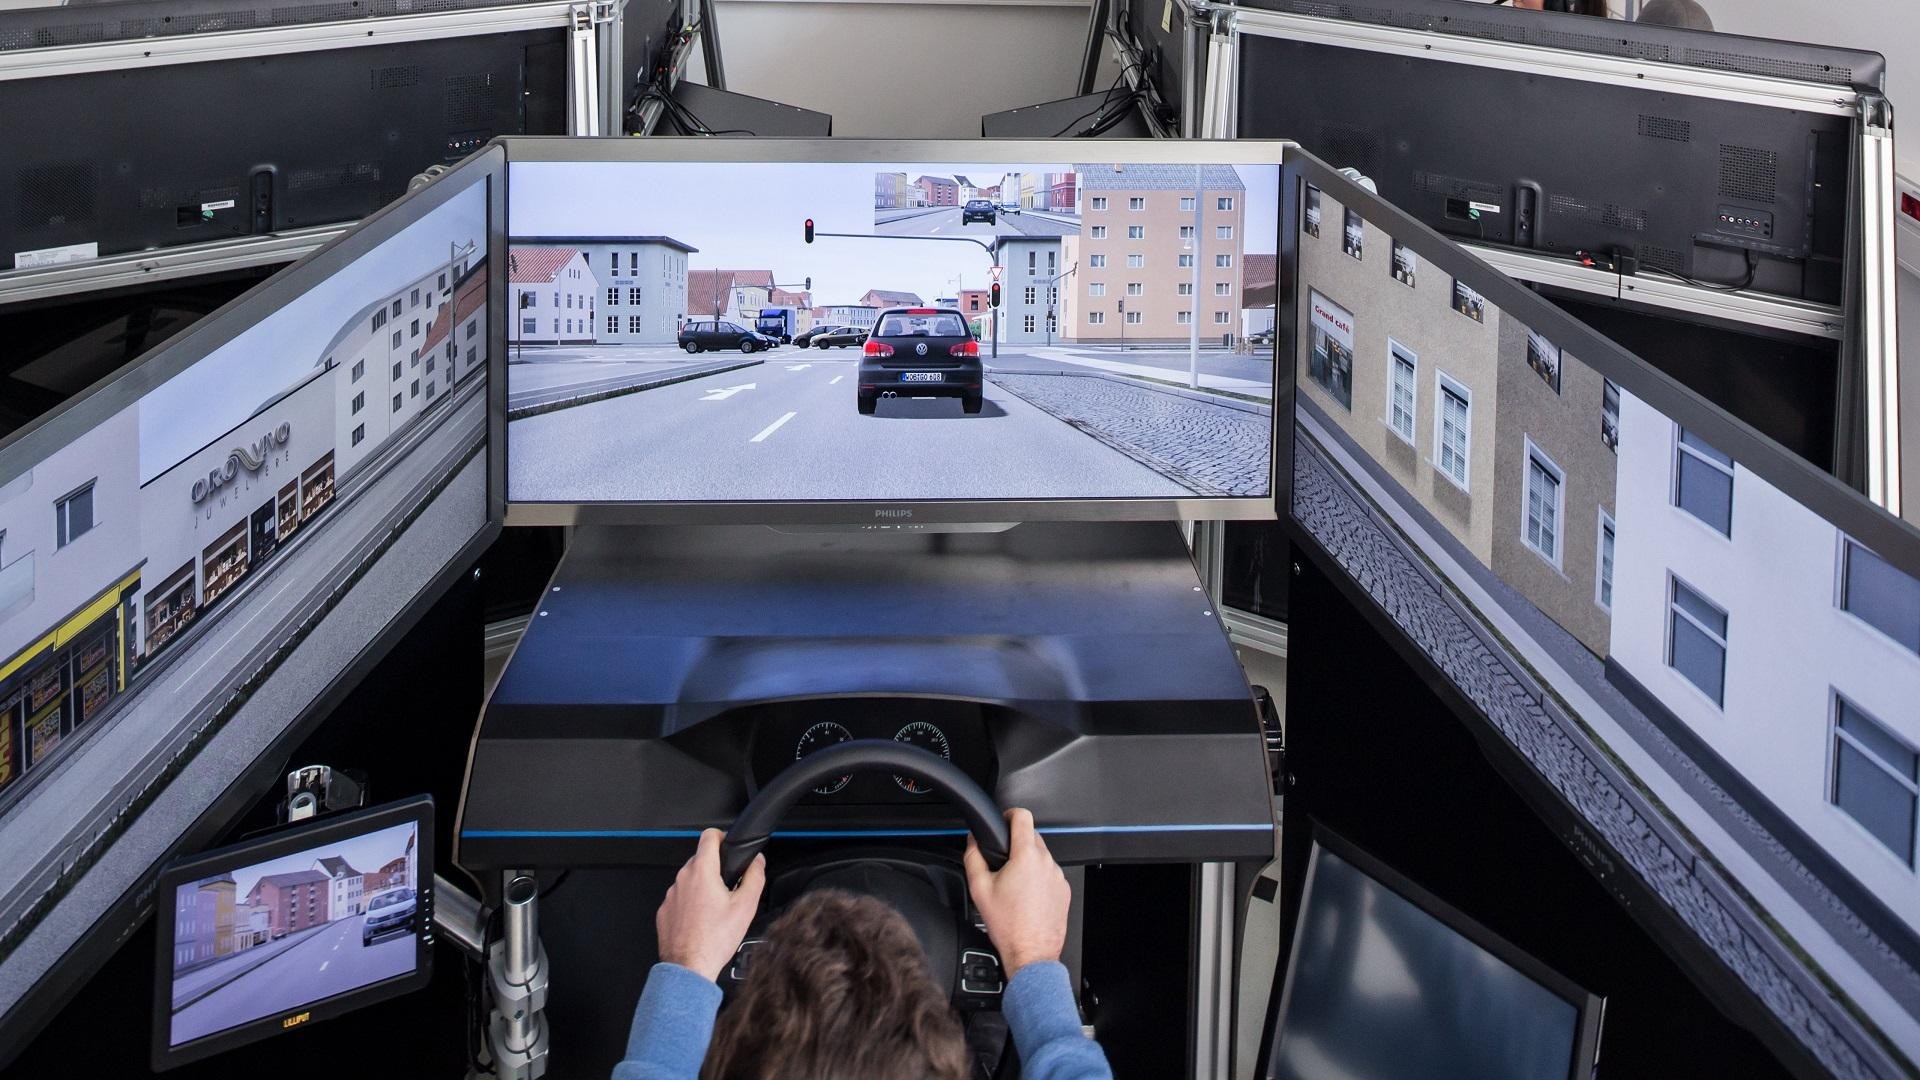 MoSAIC: Multi-Fahrer-Simulation zur Erprobung kooperativer Fahrerassistenz